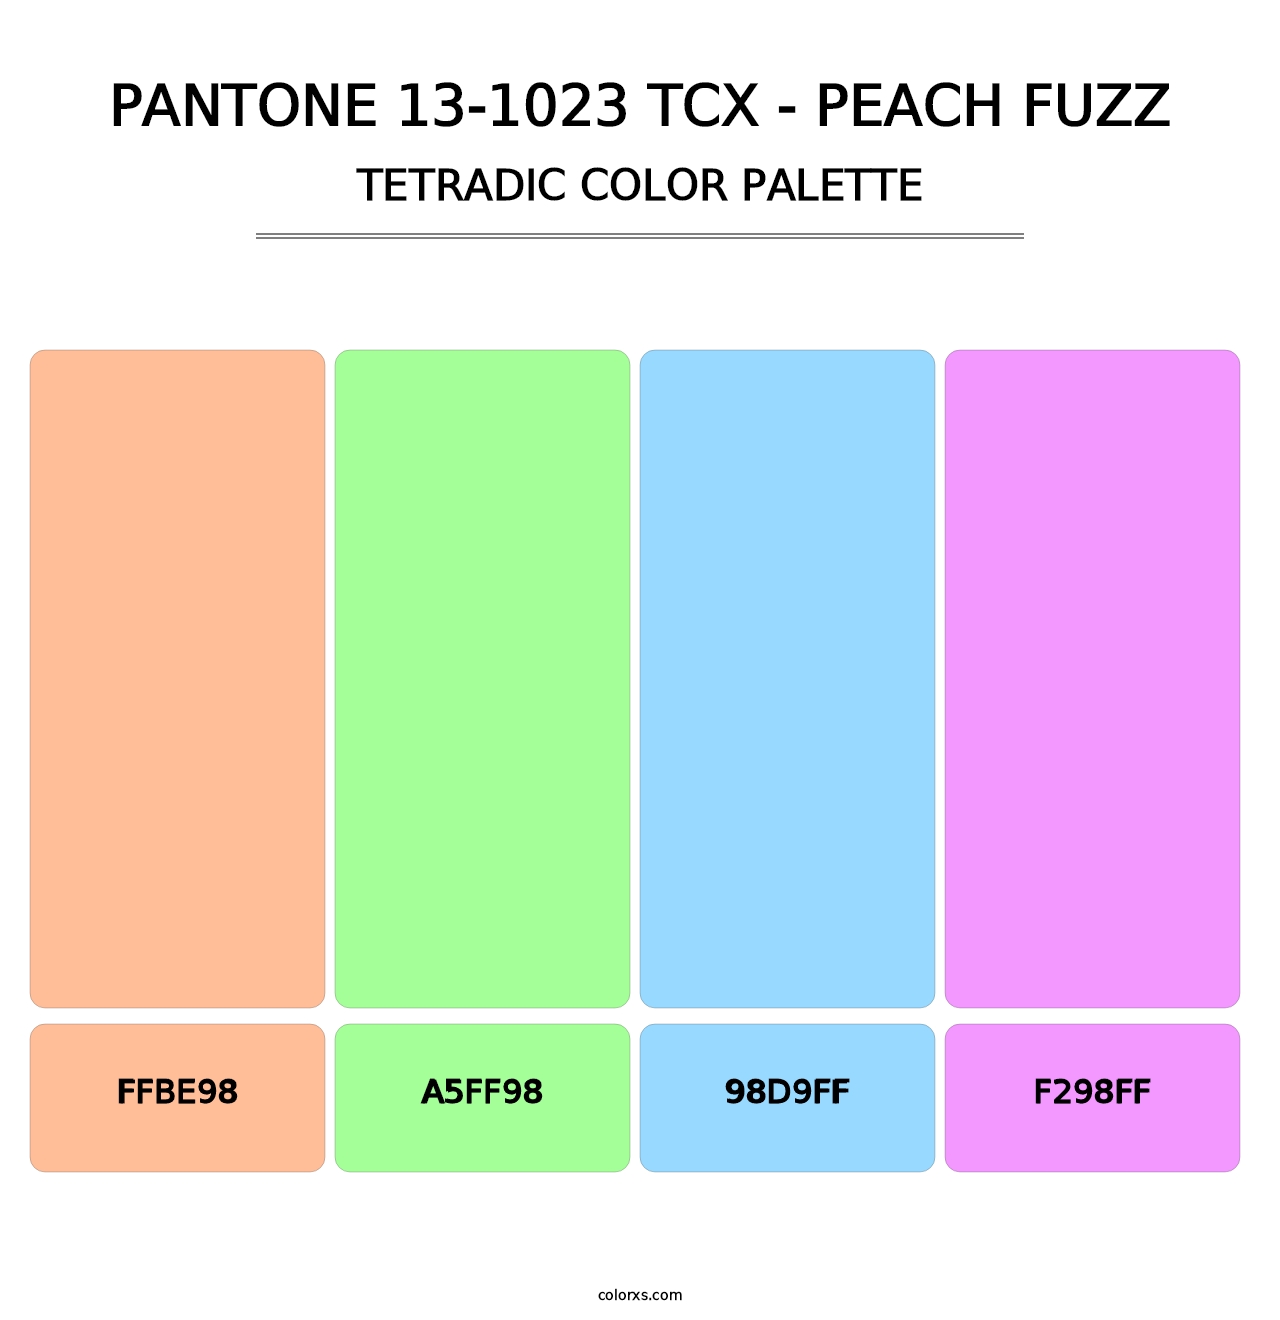 PANTONE 13-1023 TCX - Peach Fuzz - Tetradic Color Palette